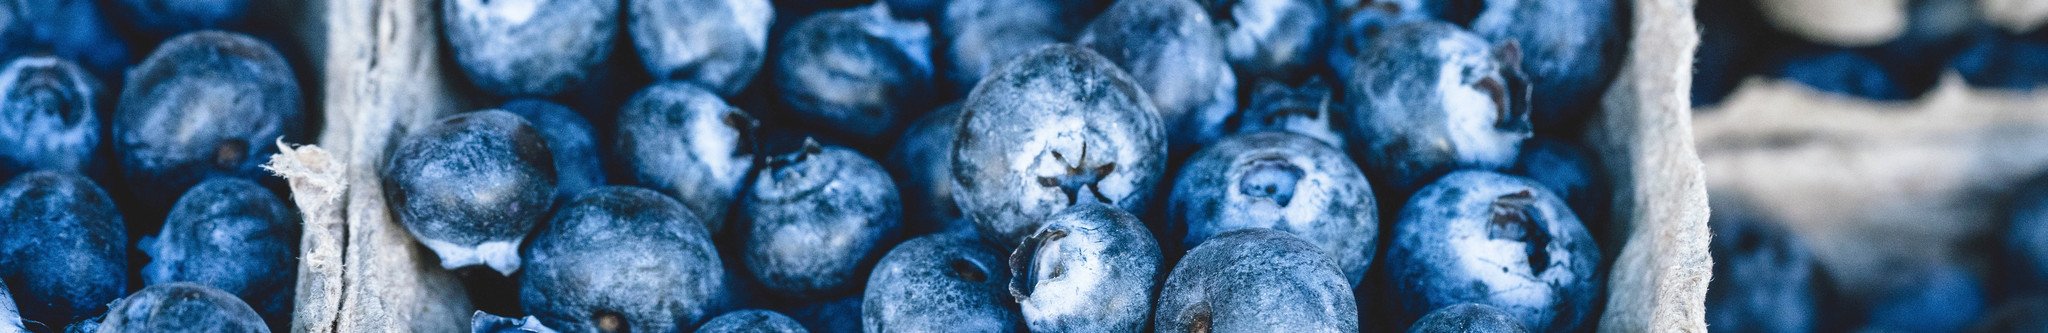 blueberries clipart antioxidant